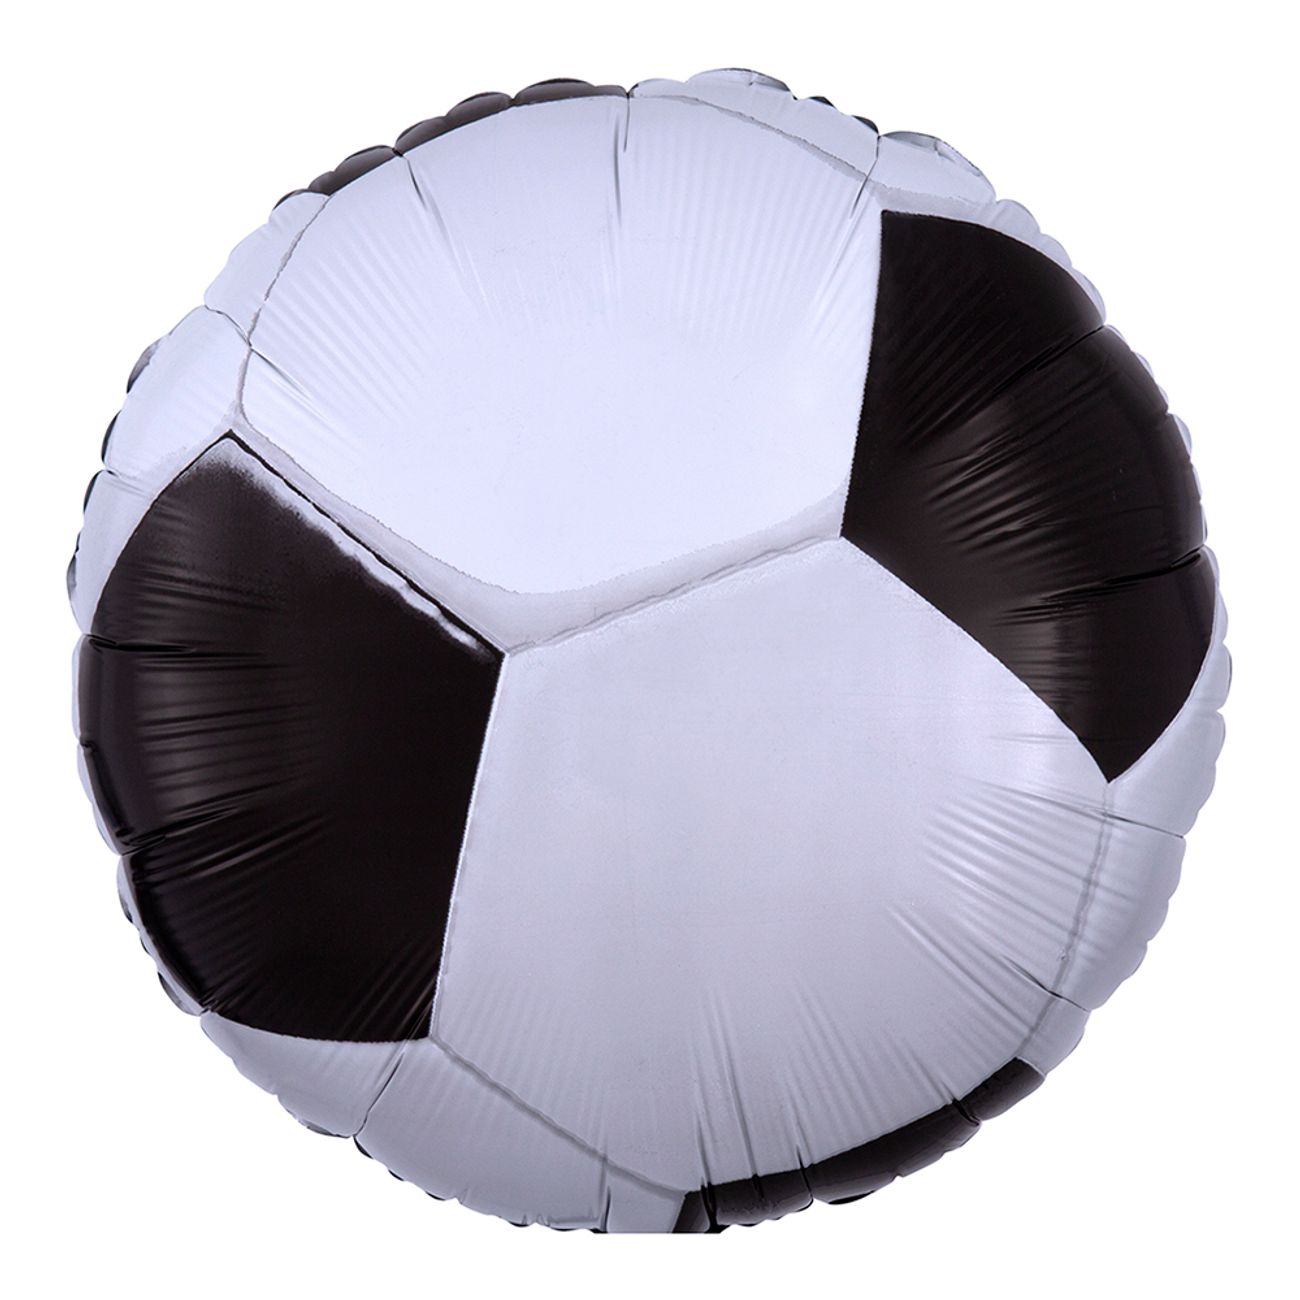 folieballong-championship-fotboll-102510-1